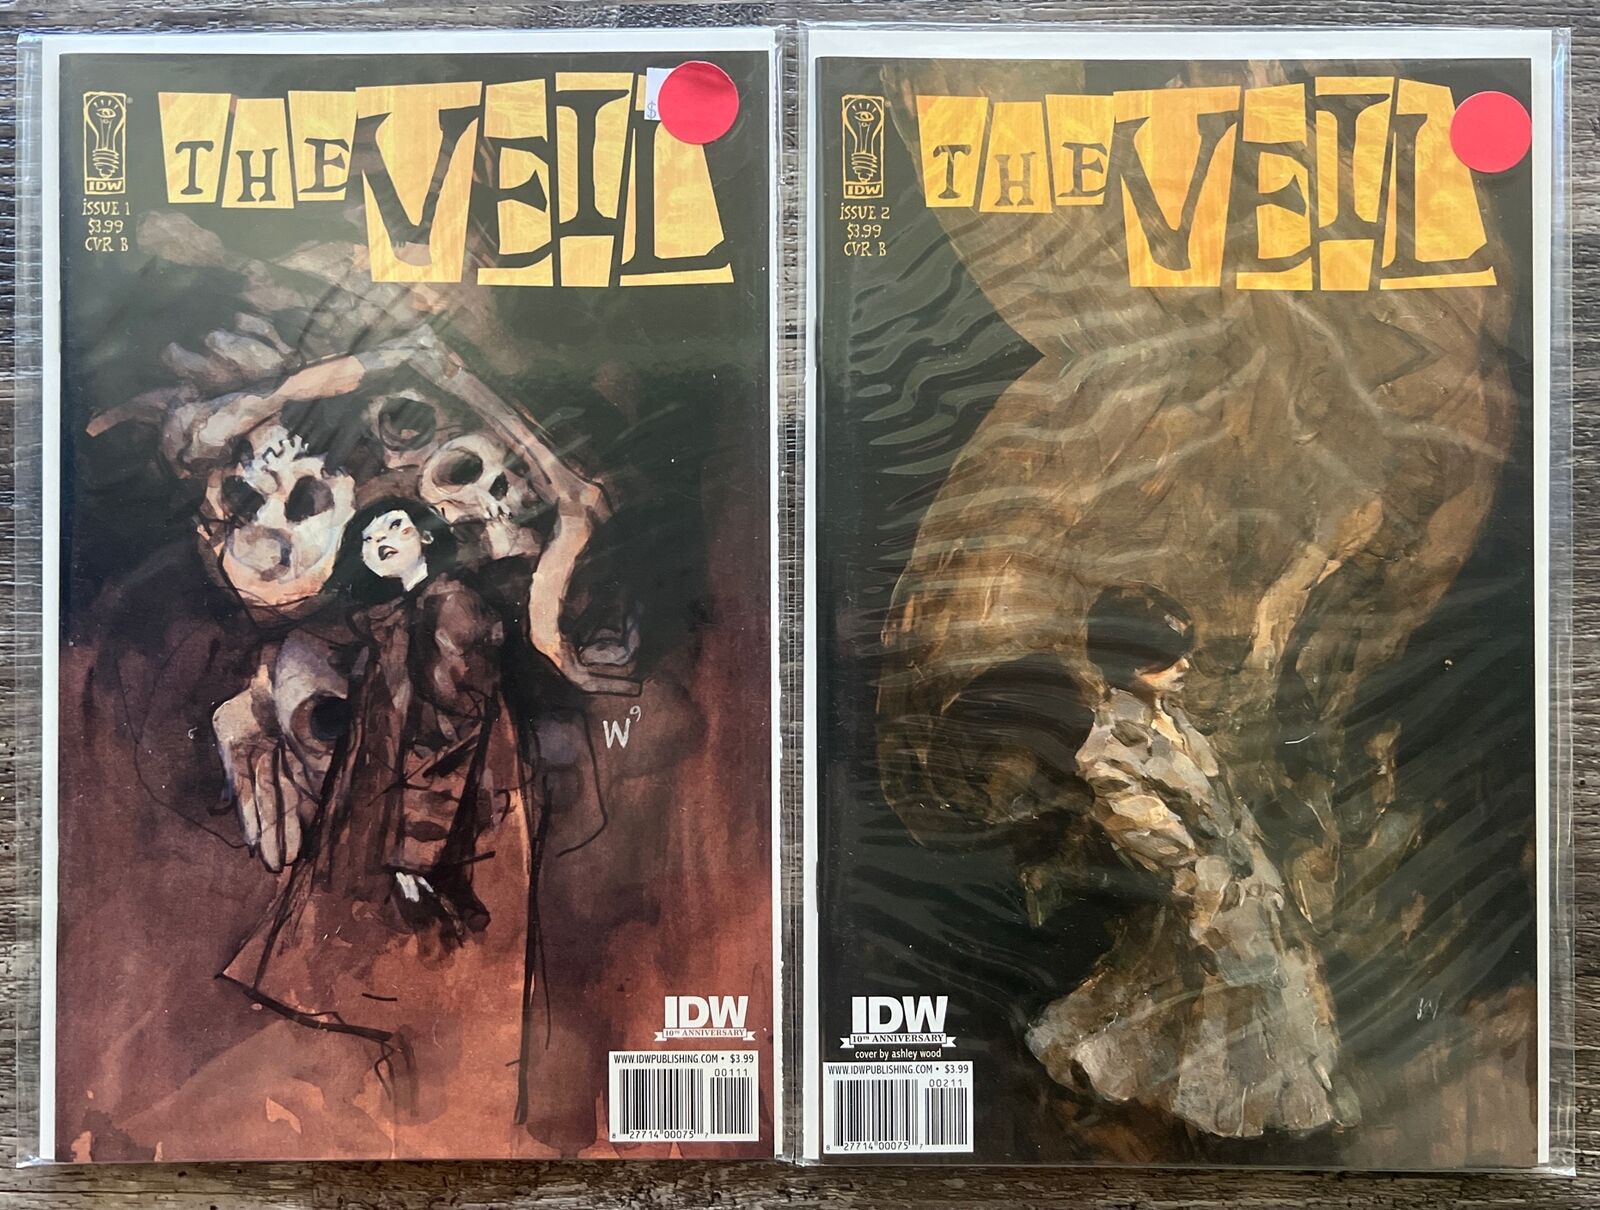 The Veil #s 1&2 - IDW Comics - Clean Copies - Ashley Wood Art - HTF - Low Print